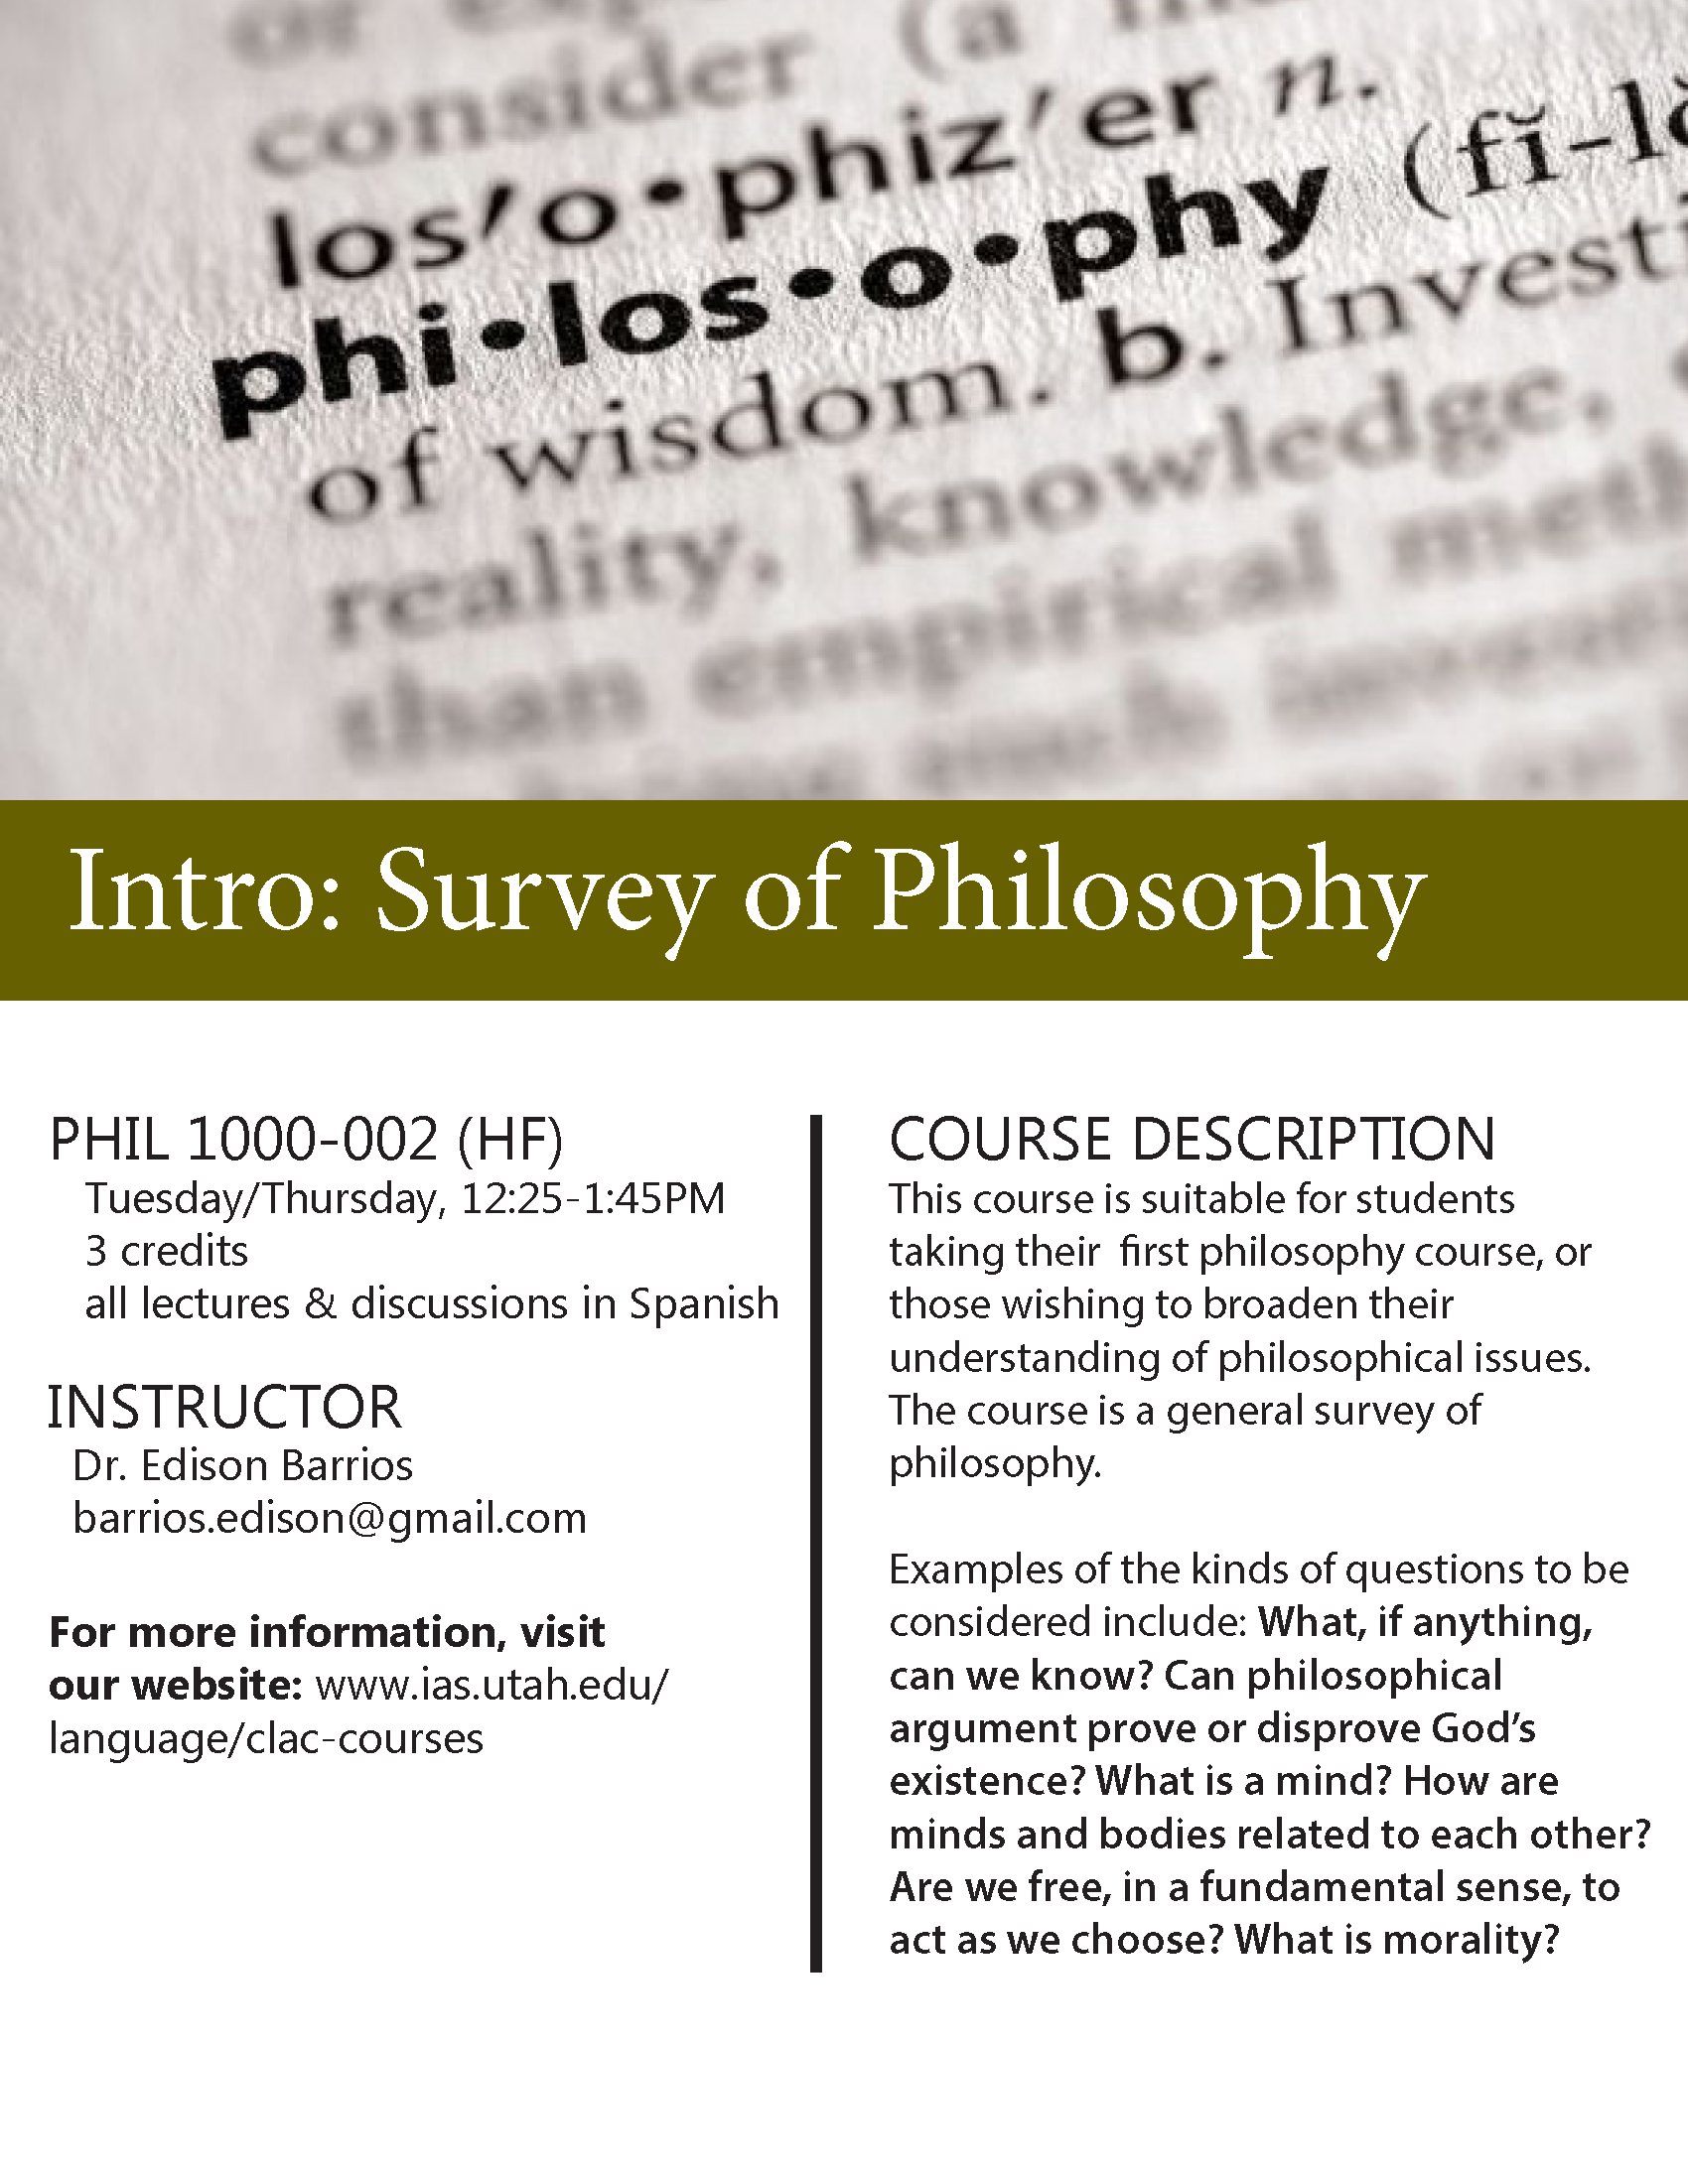 PHIL 1000  Intro: Survey of Philosophy